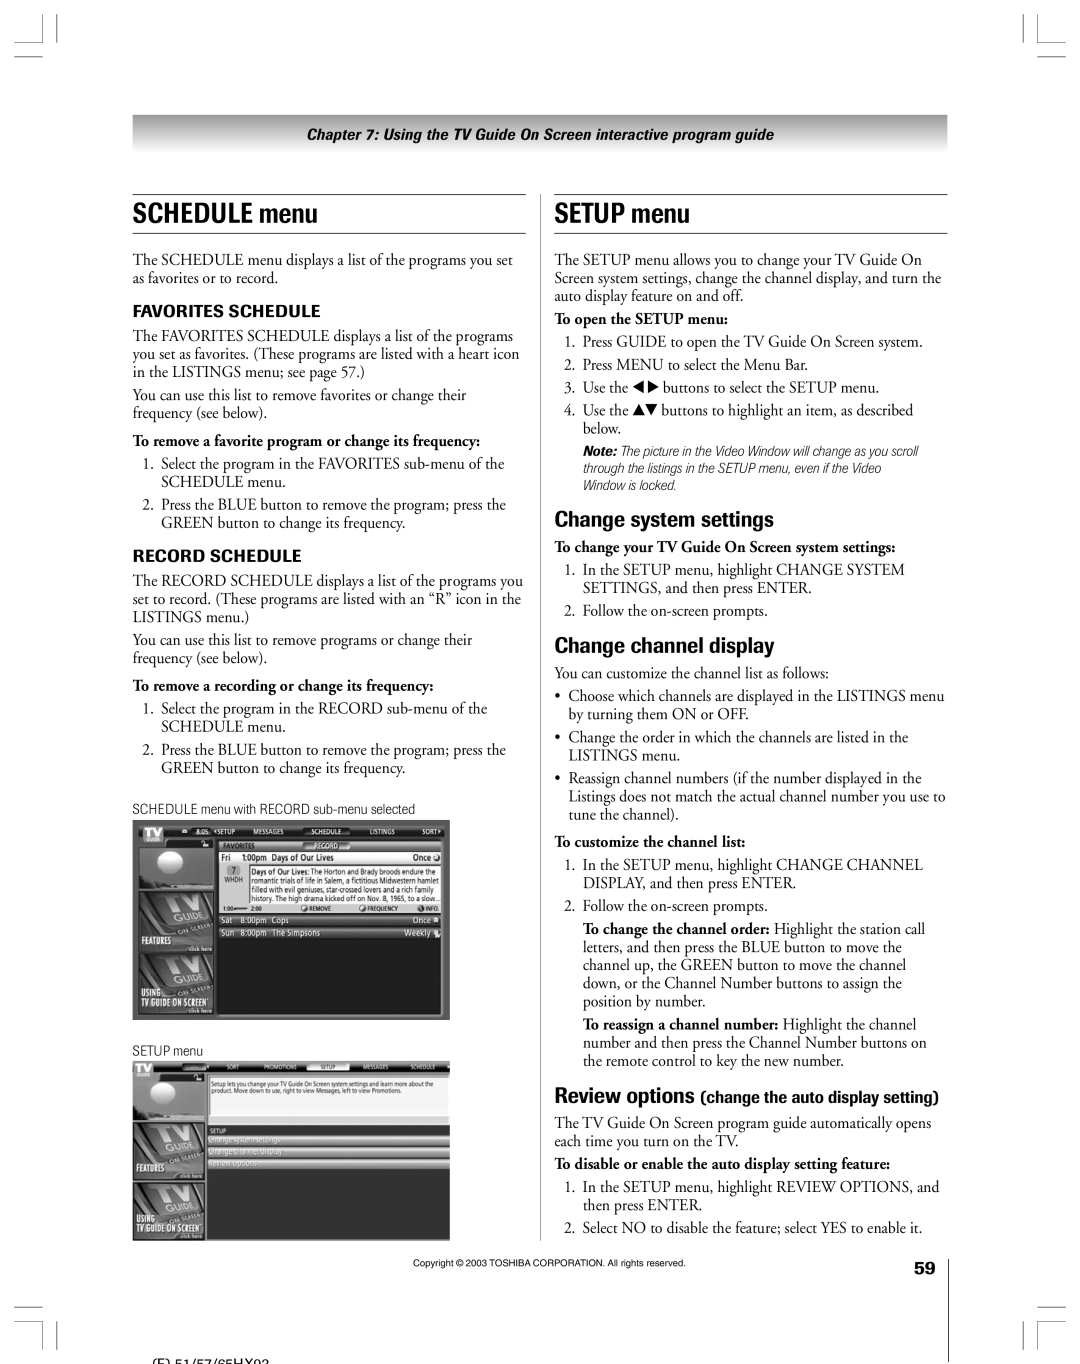 Toshiba 51HX93 owner manual SCHEDULE menu, SETUP menu, Change system settings, Change channel display, Favorites Schedule 